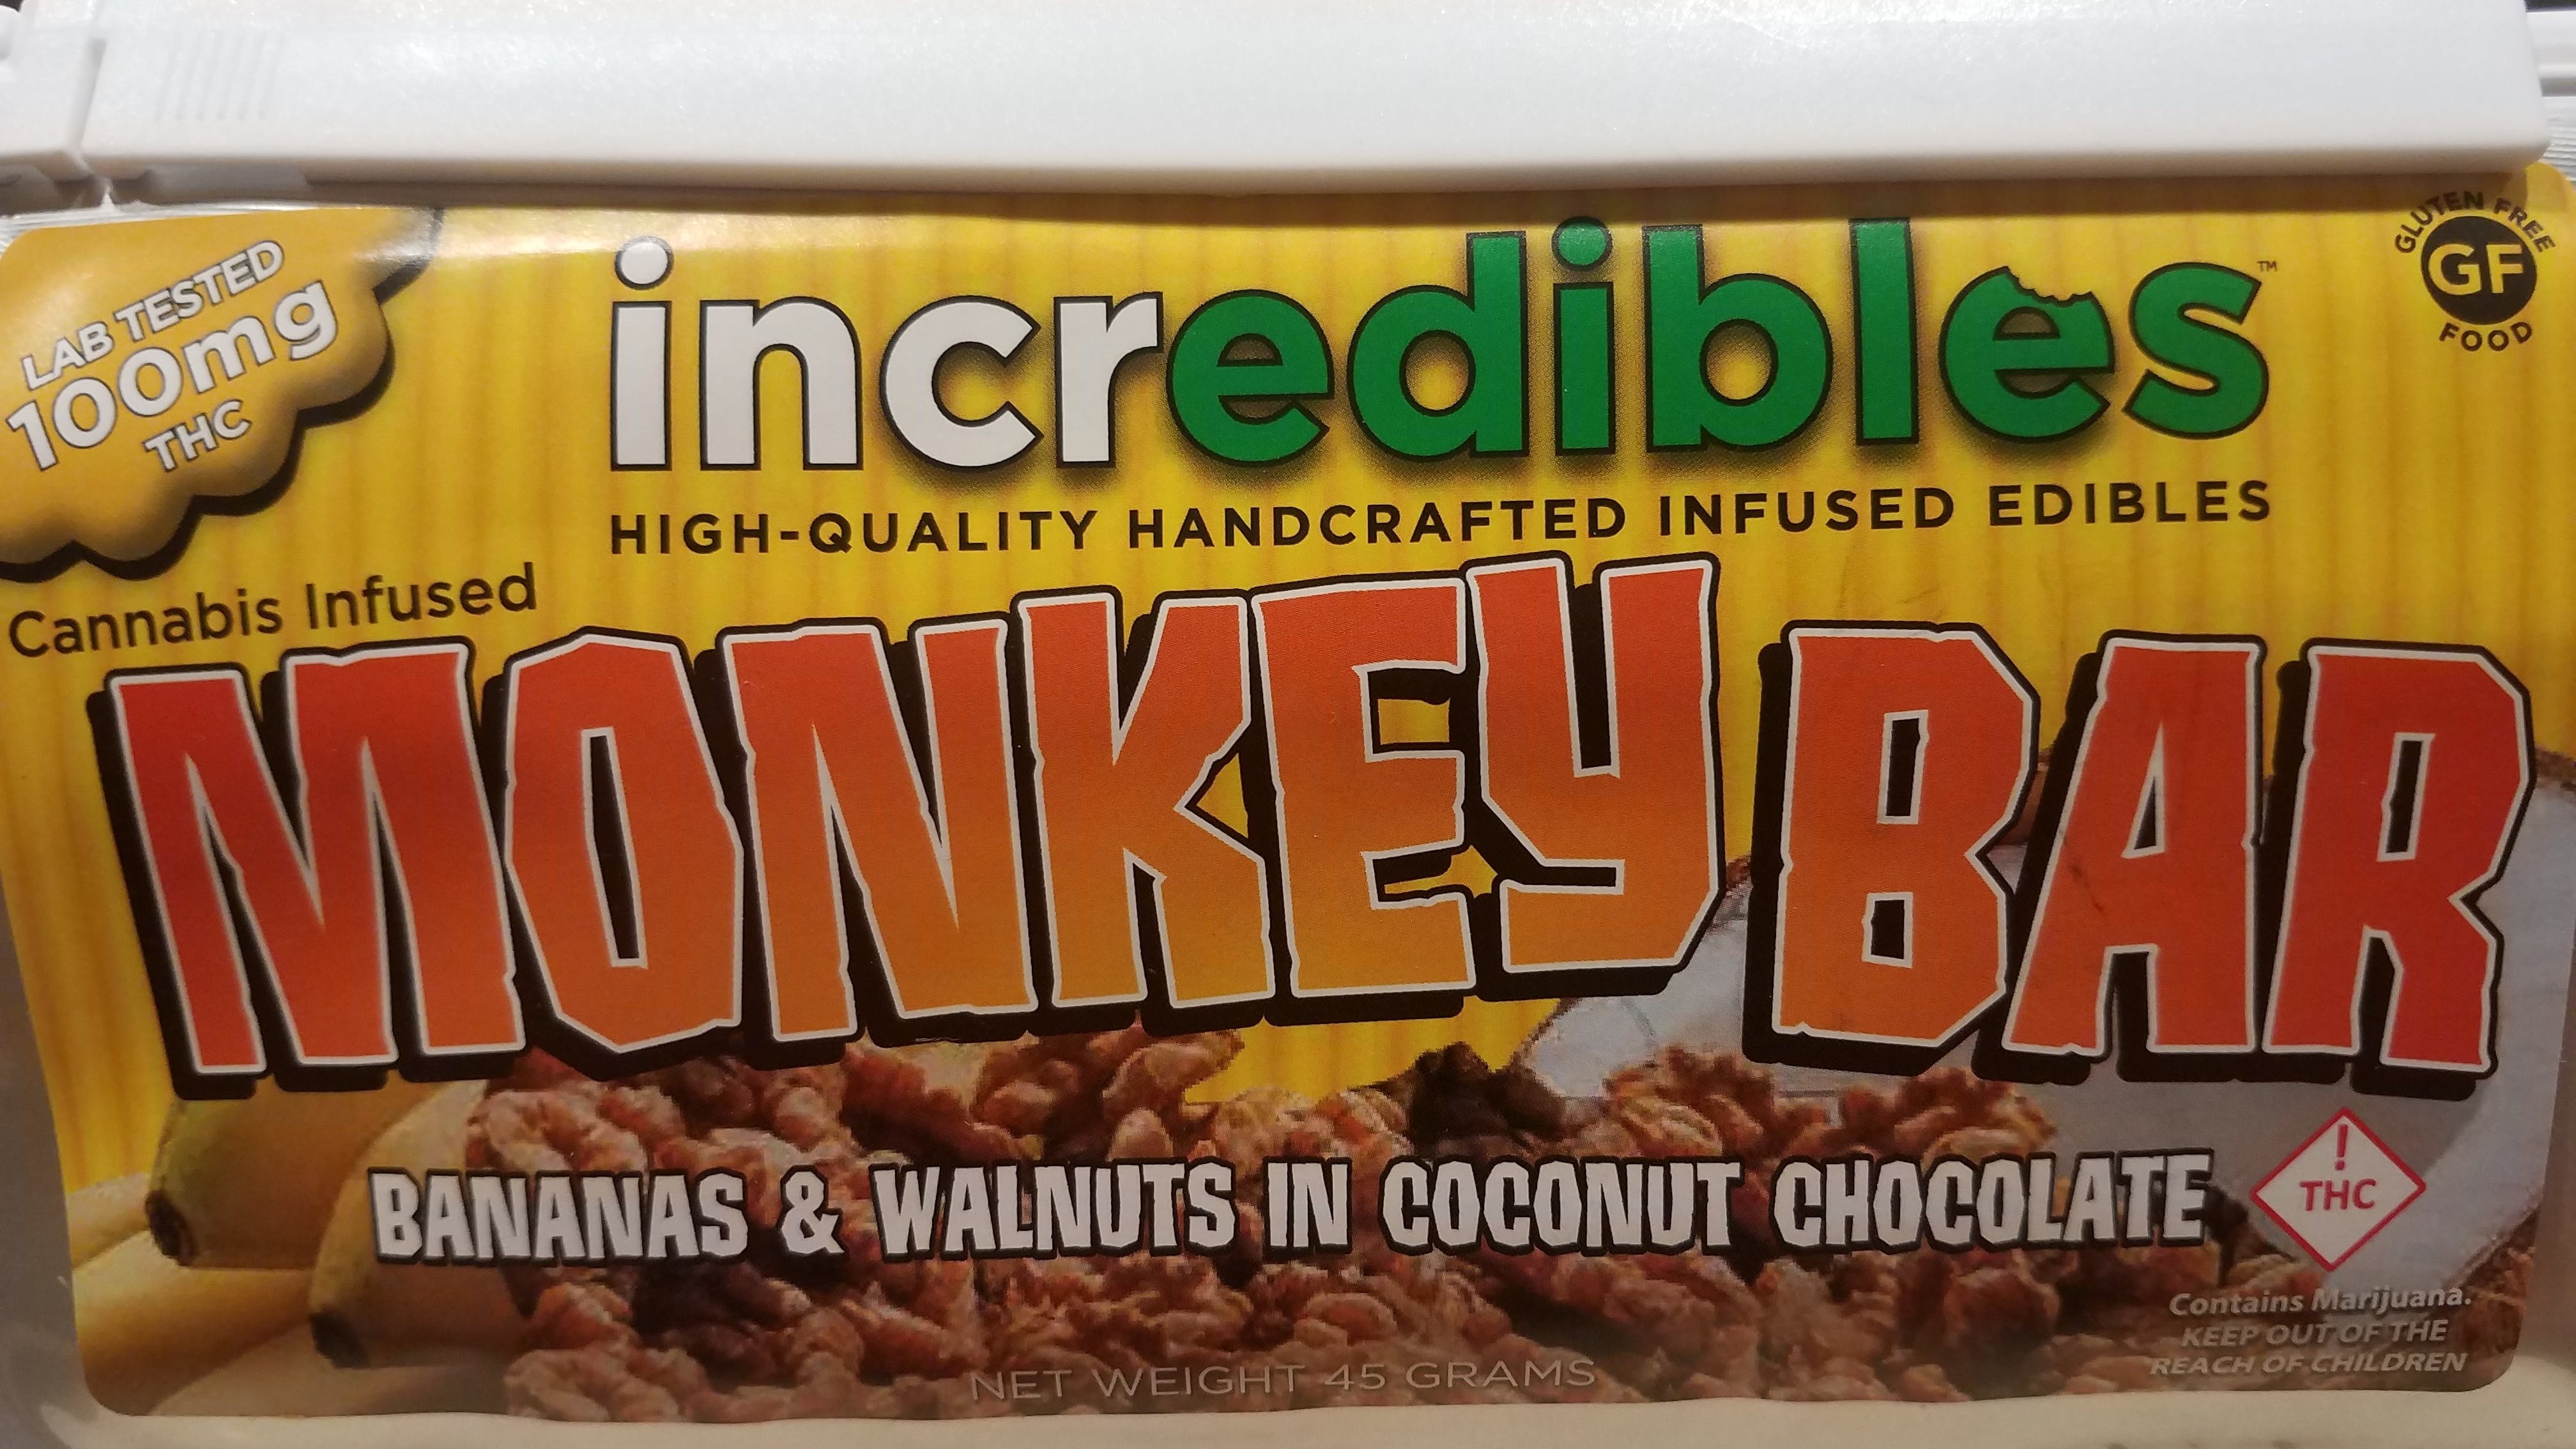 edible-incredibles-monkey-bar-2c-100mg